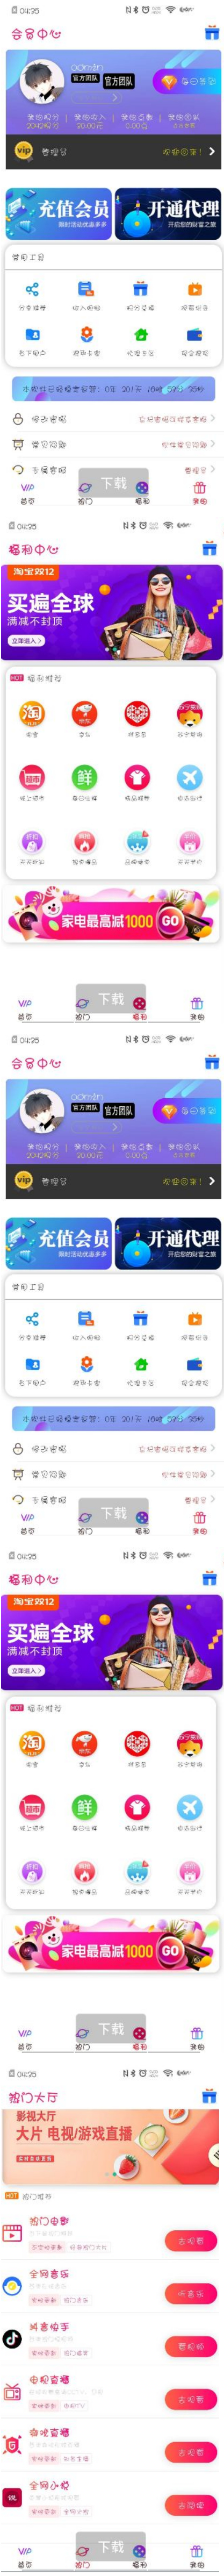 Thinkphp 新UI千月影视盒子源码插图